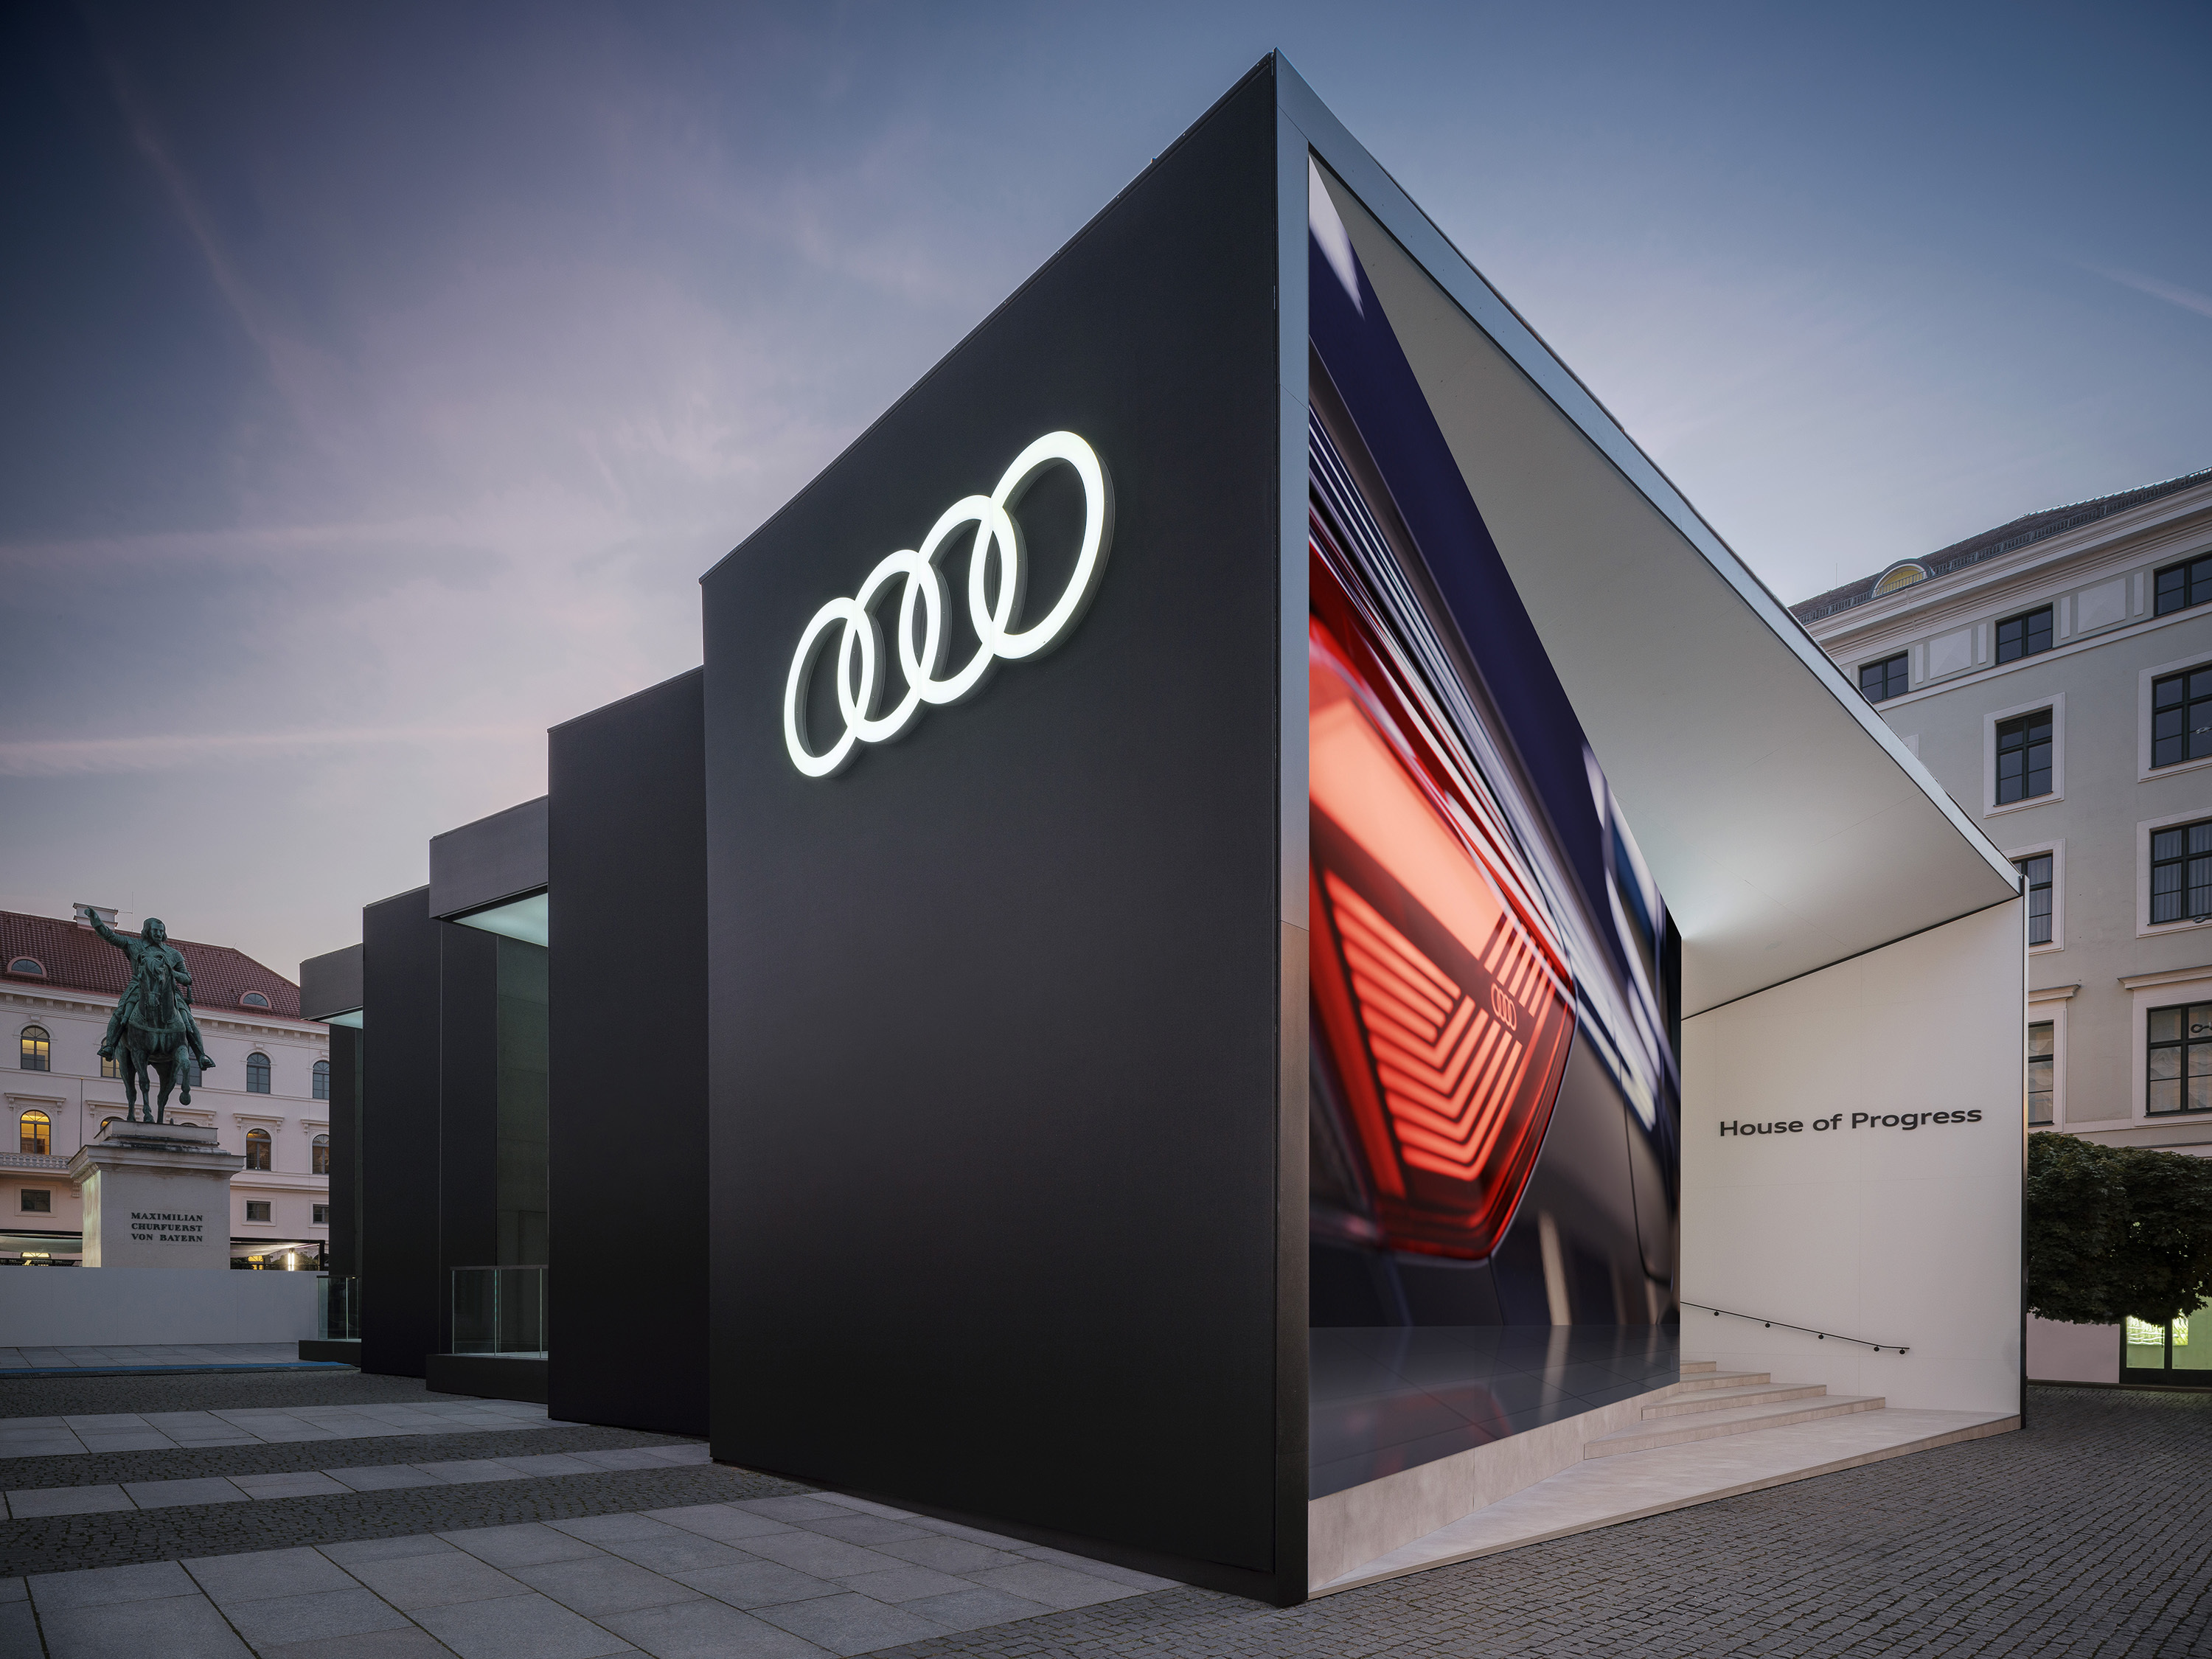 Audi emblem, logo, AUDI AG 85045 Ingolstadt, Audi, brand, …